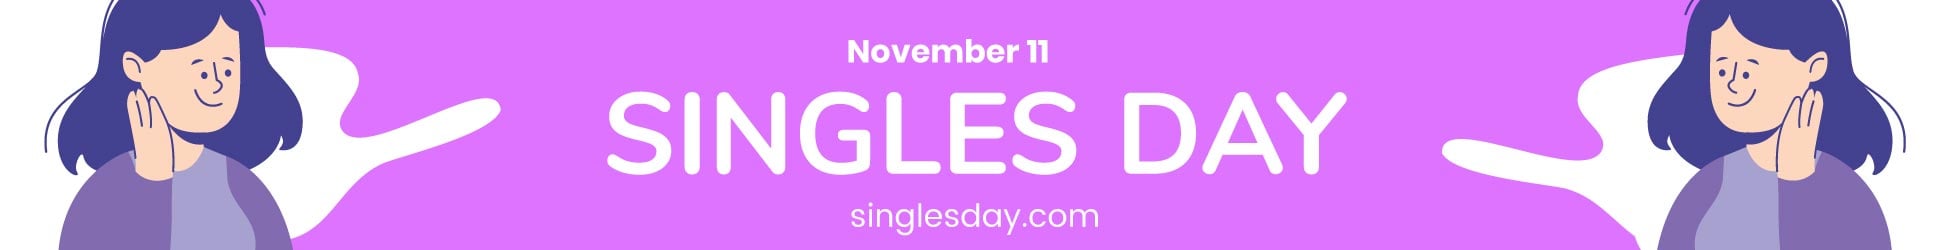 Singles Day Website Banner in Illustrator, PSD, EPS, SVG, JPG, PNG